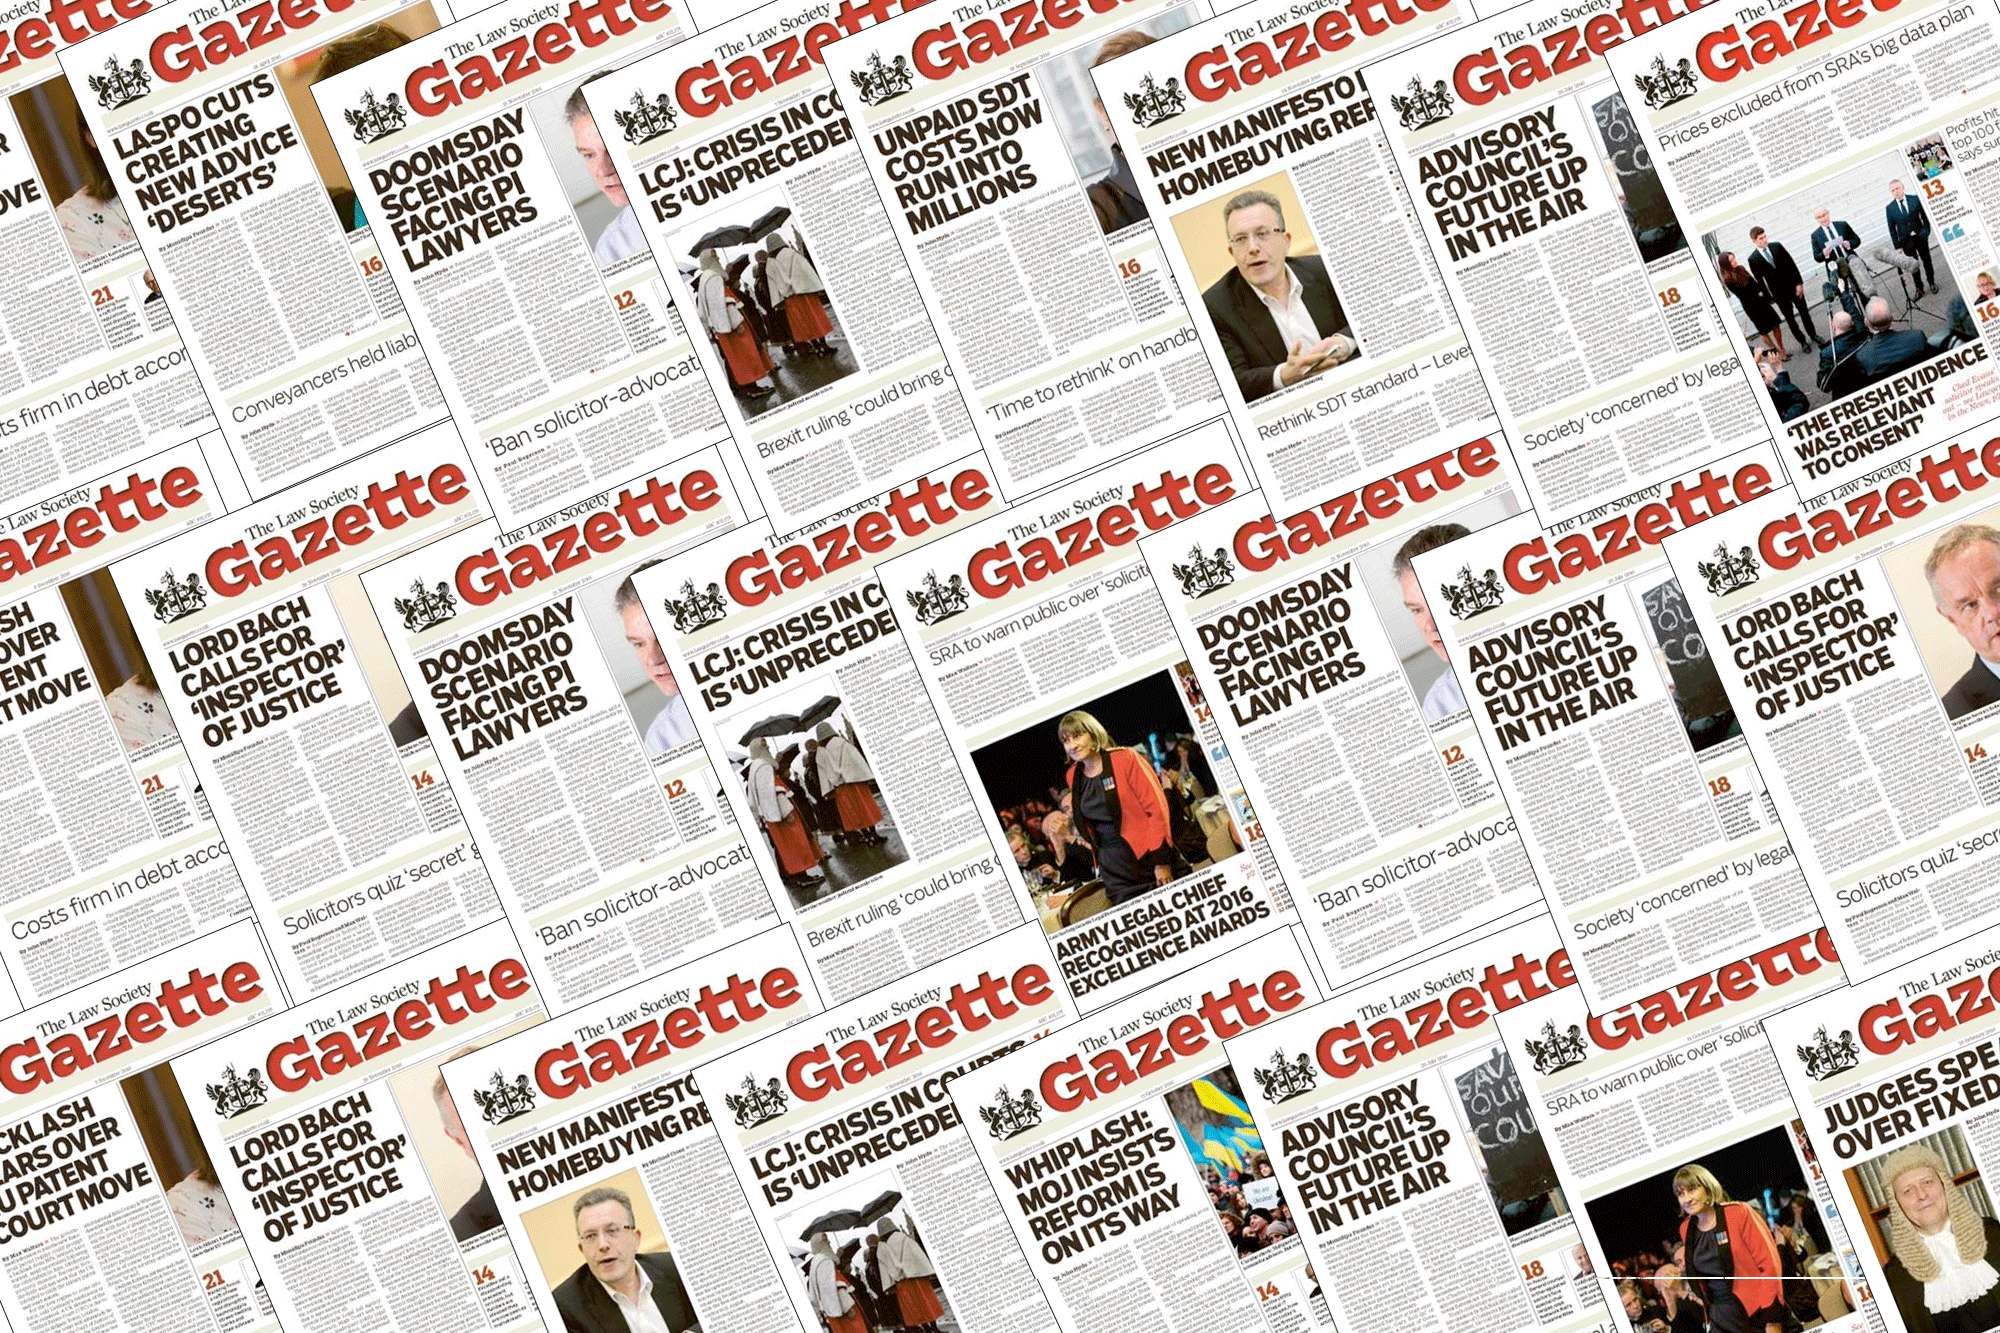 Gazette covers year